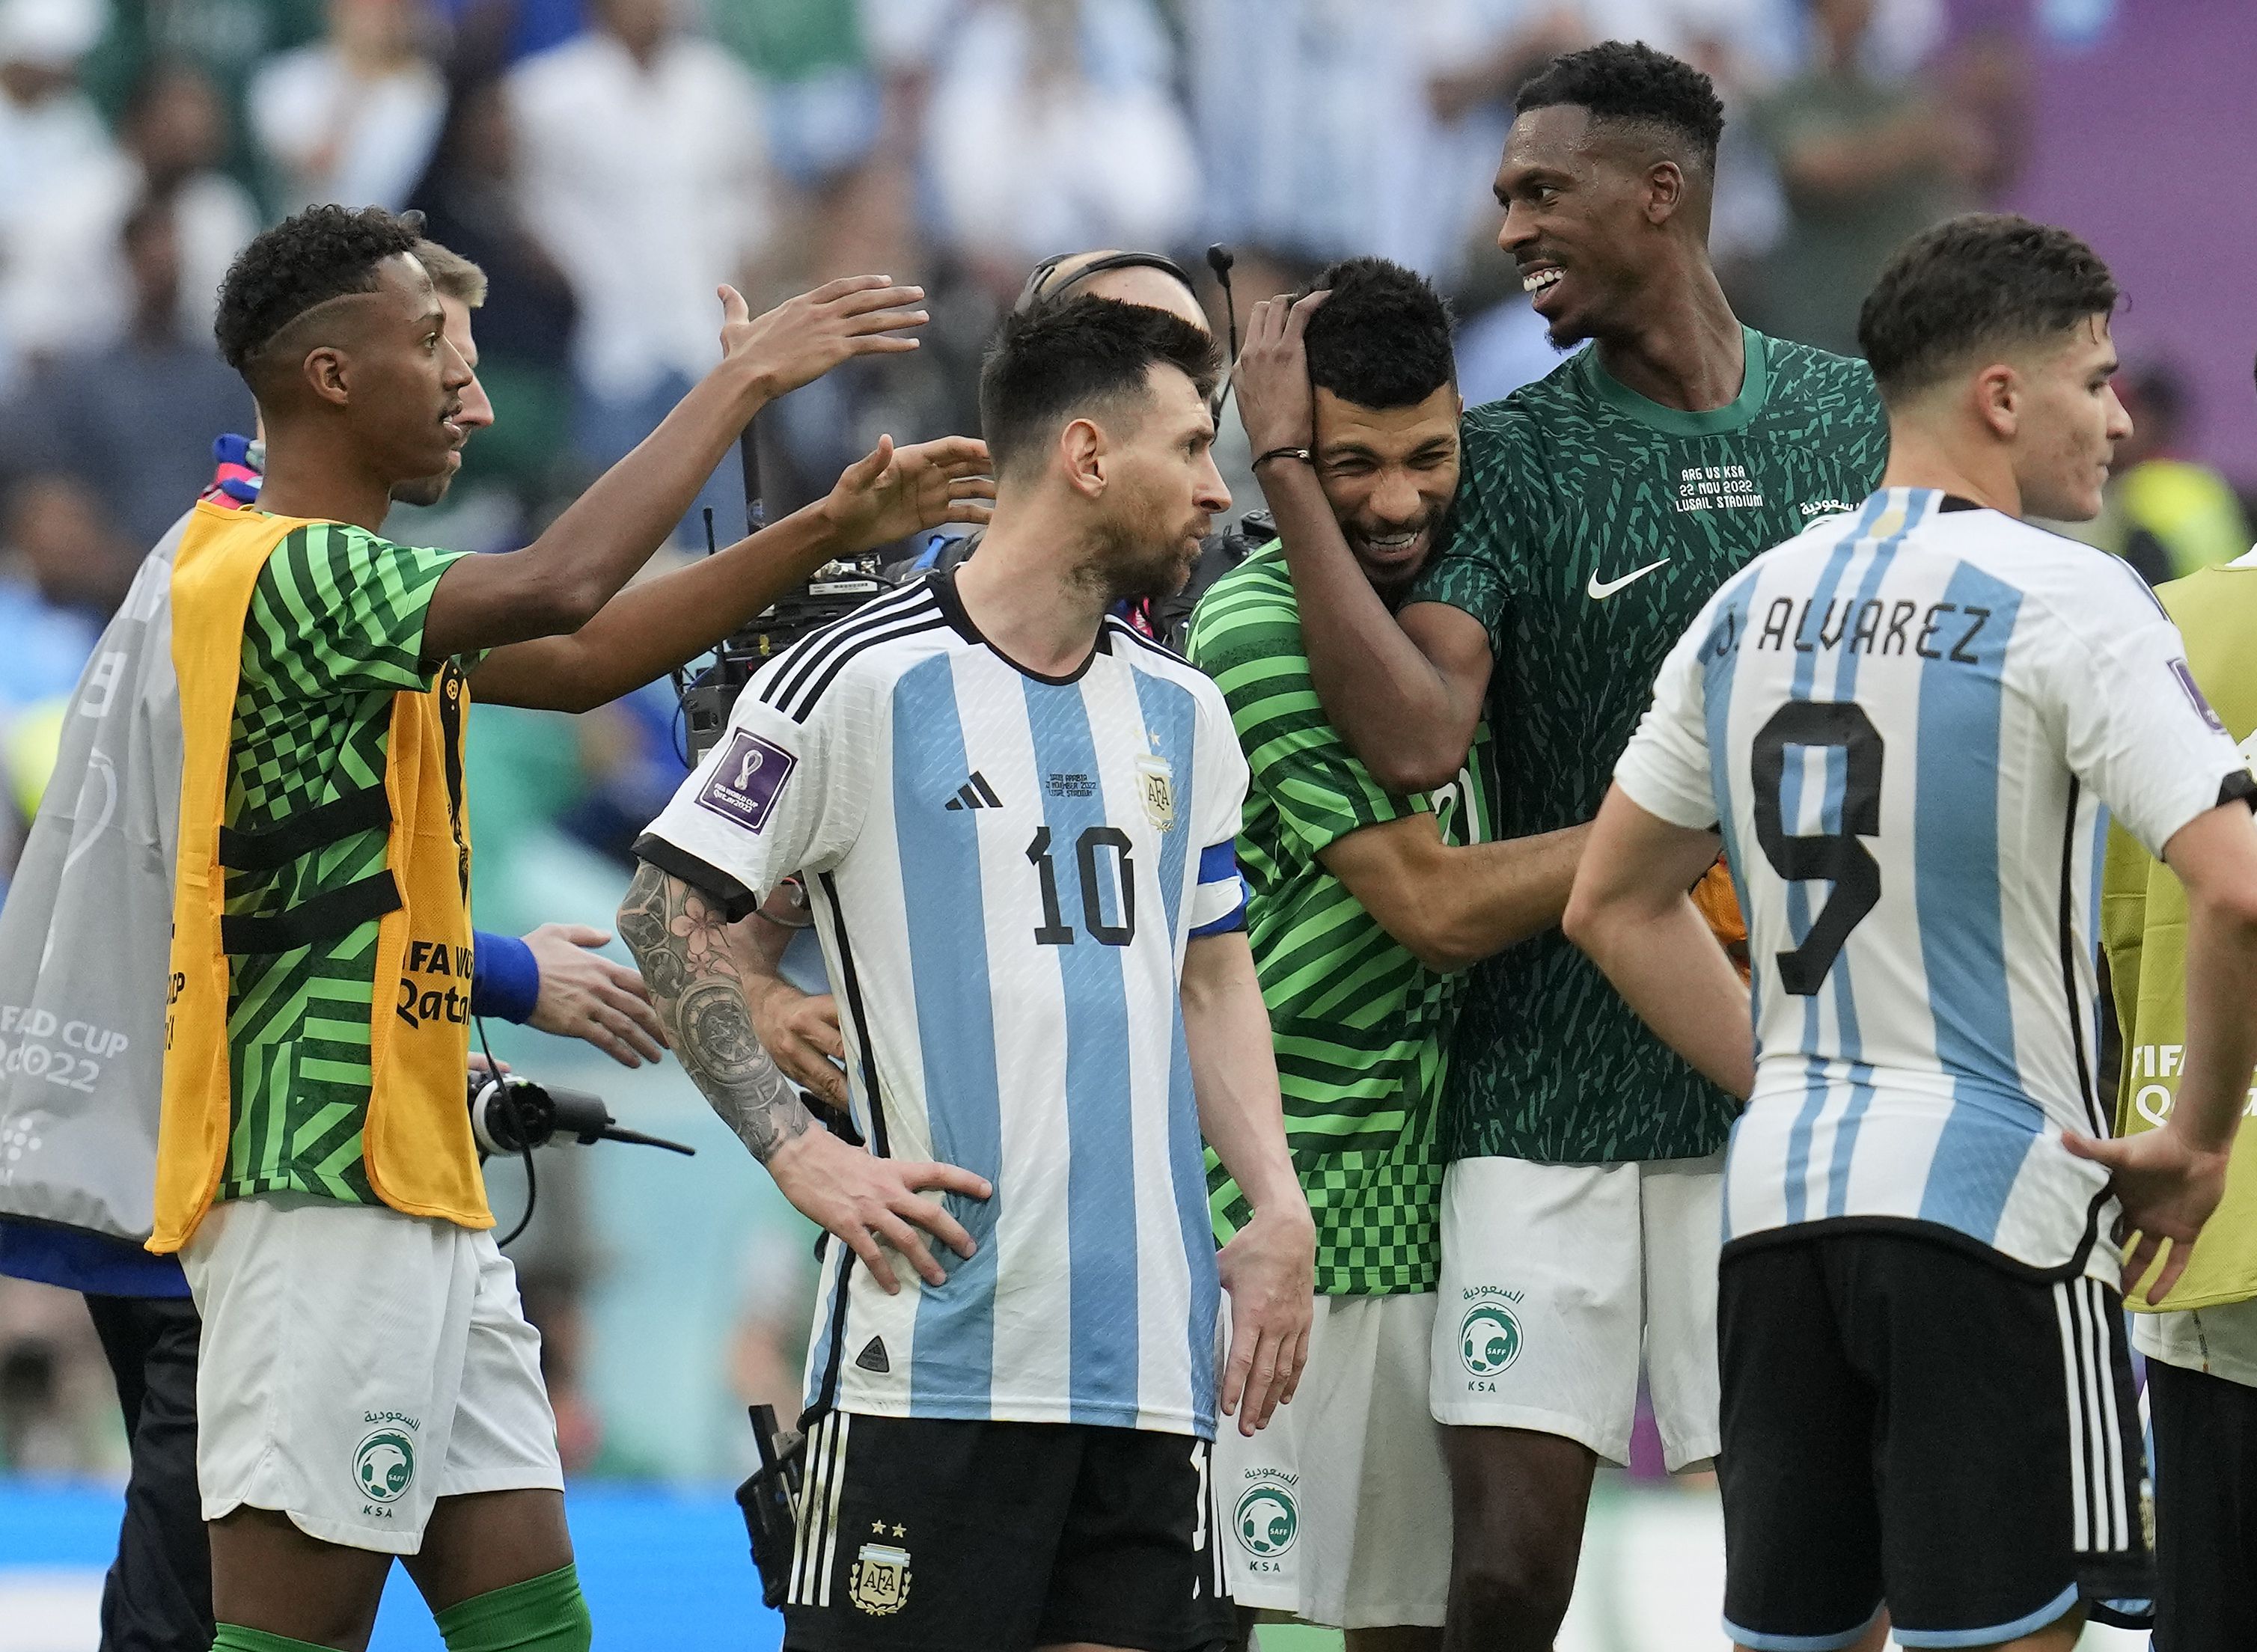 HUBLOT CONGRATULATES FIFA WORLD CUP 2022™ WINNER ARGENTINA